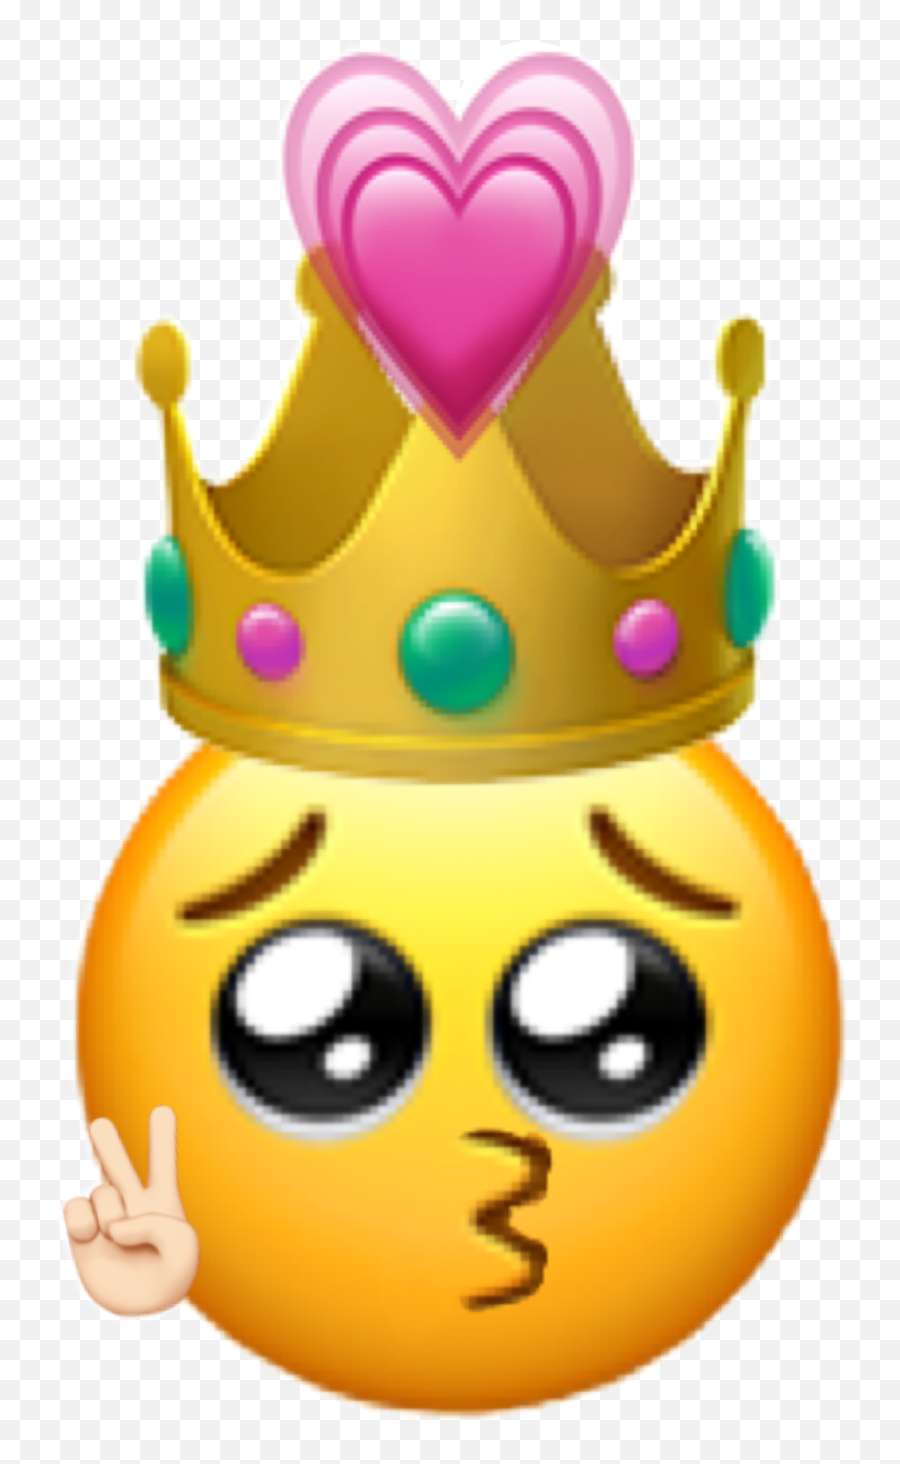 Largest Collection Of Free - Toedit Emojiphone Stickers On Emoji Crown Png Transparent,Emojios